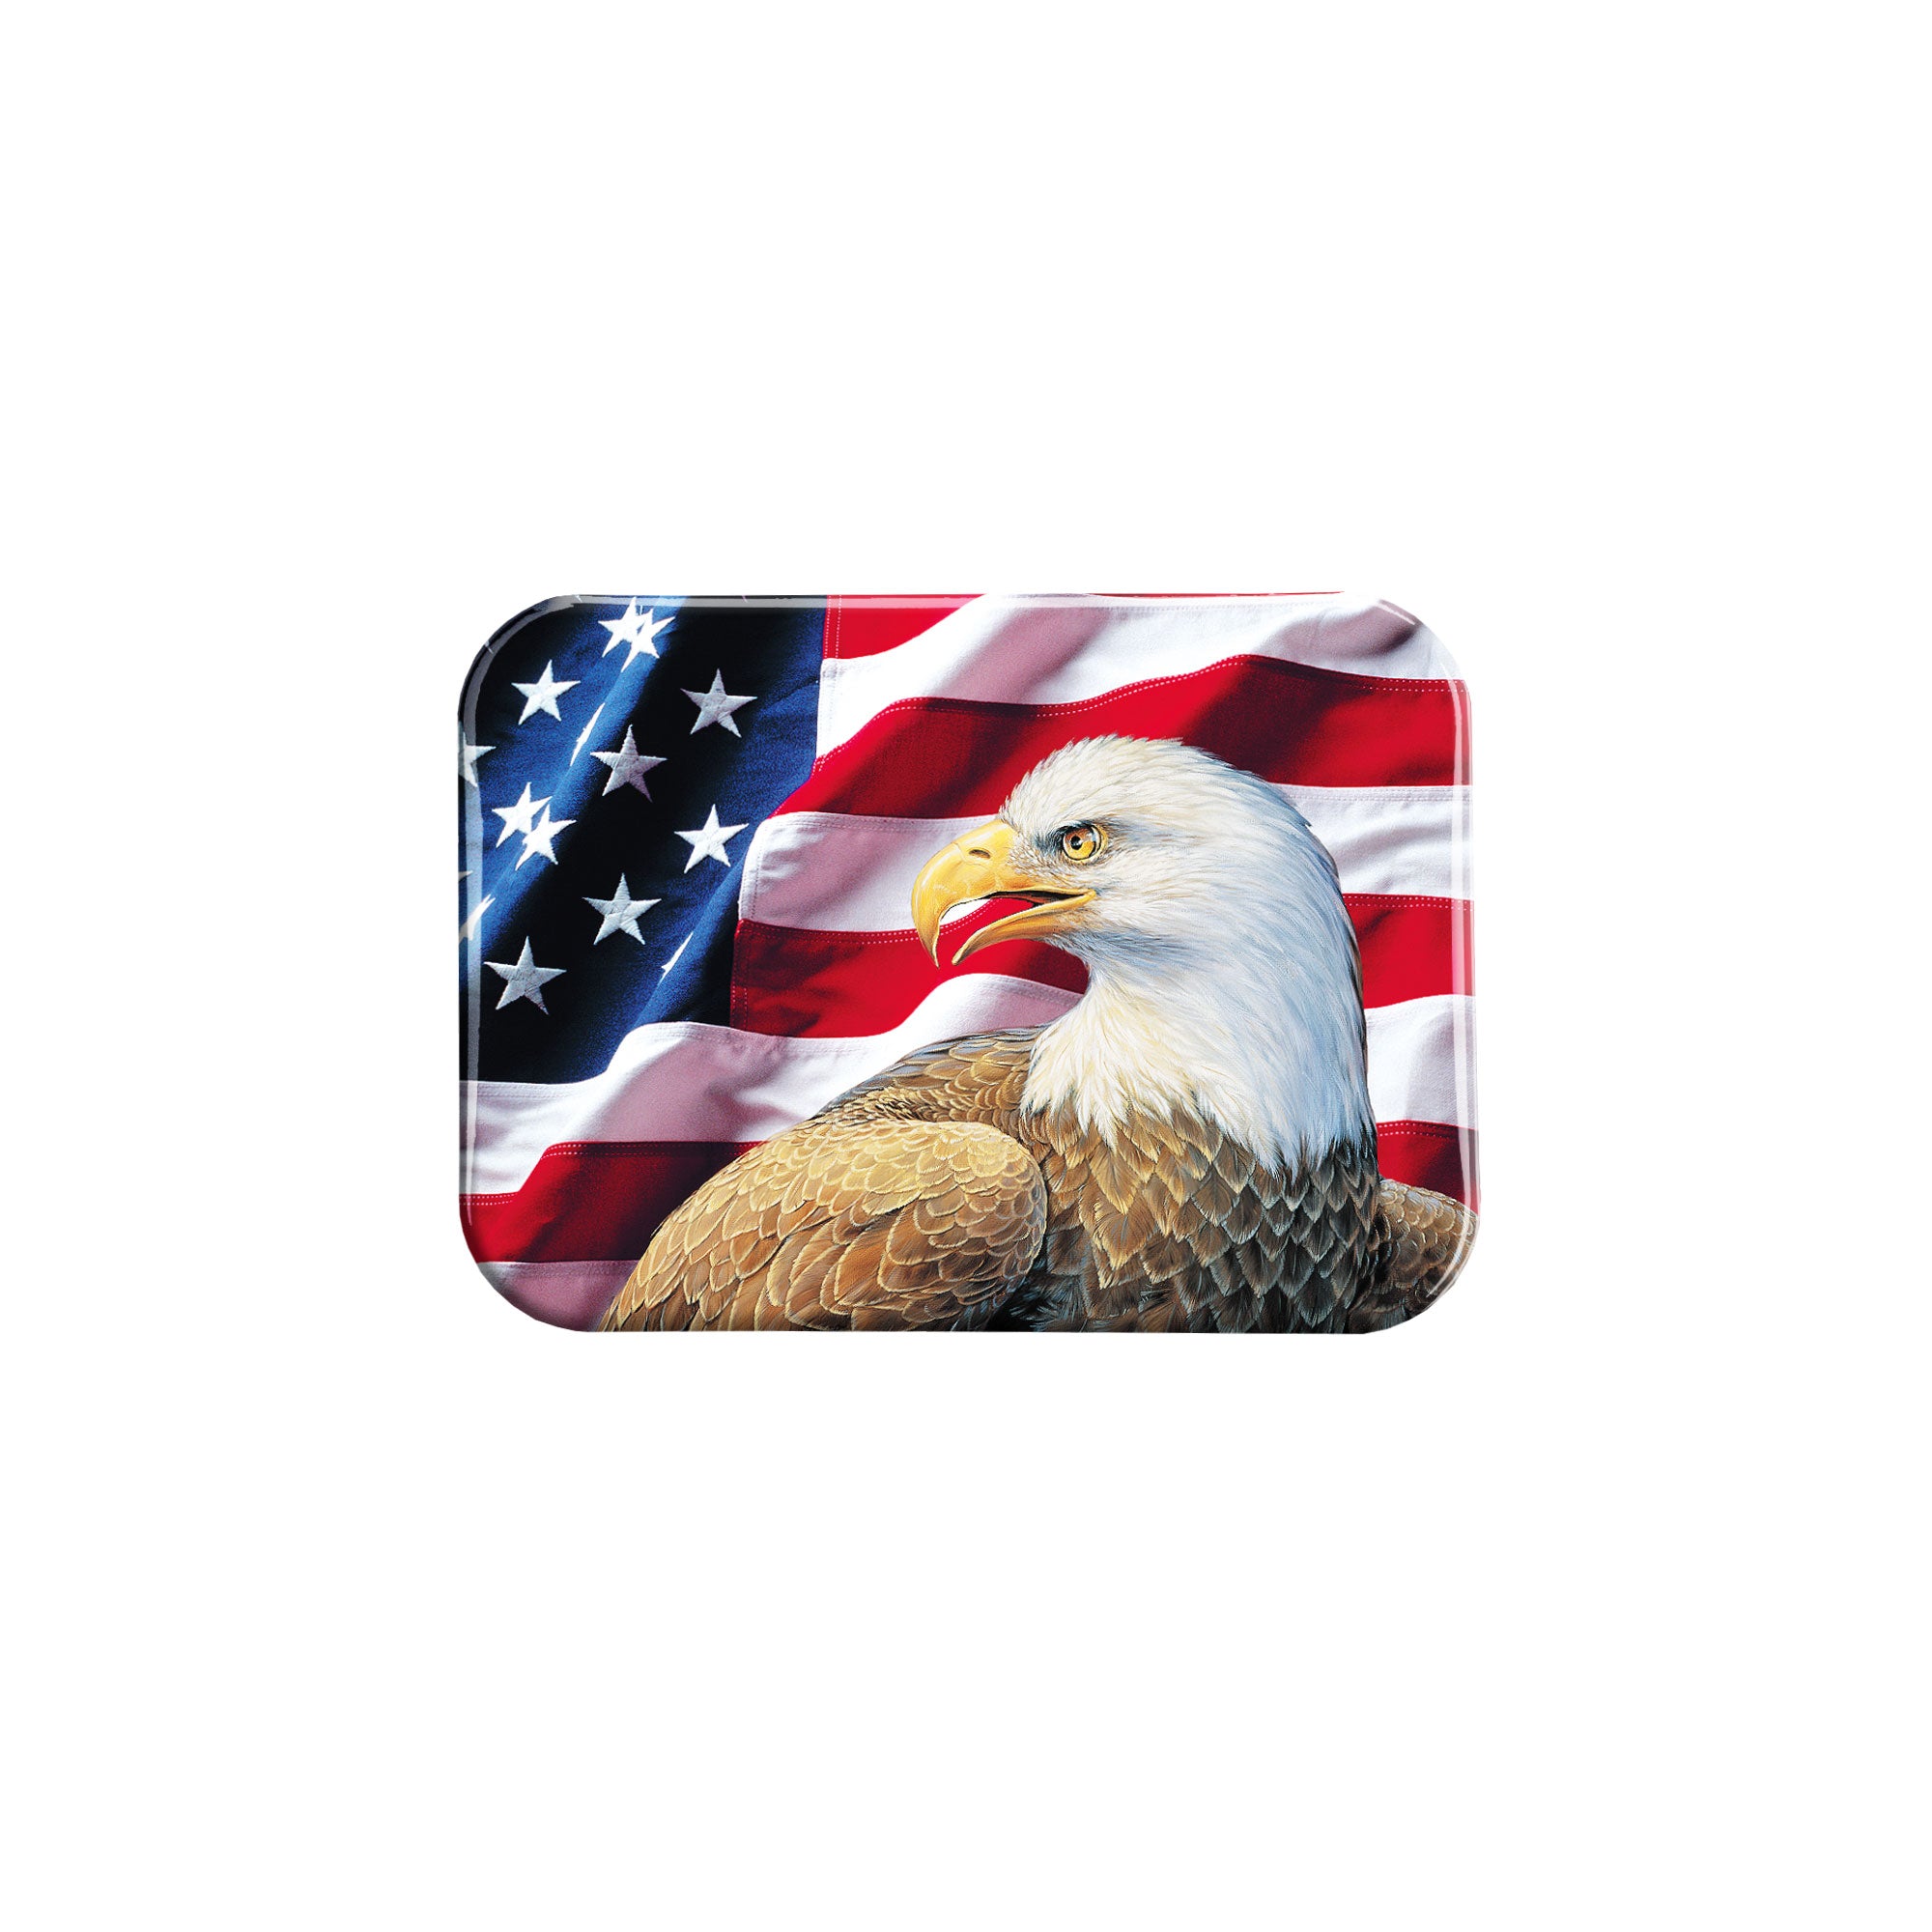 "Flag and Eagle" - 2.5" X 3.5" Rectangle Fridge Magnets